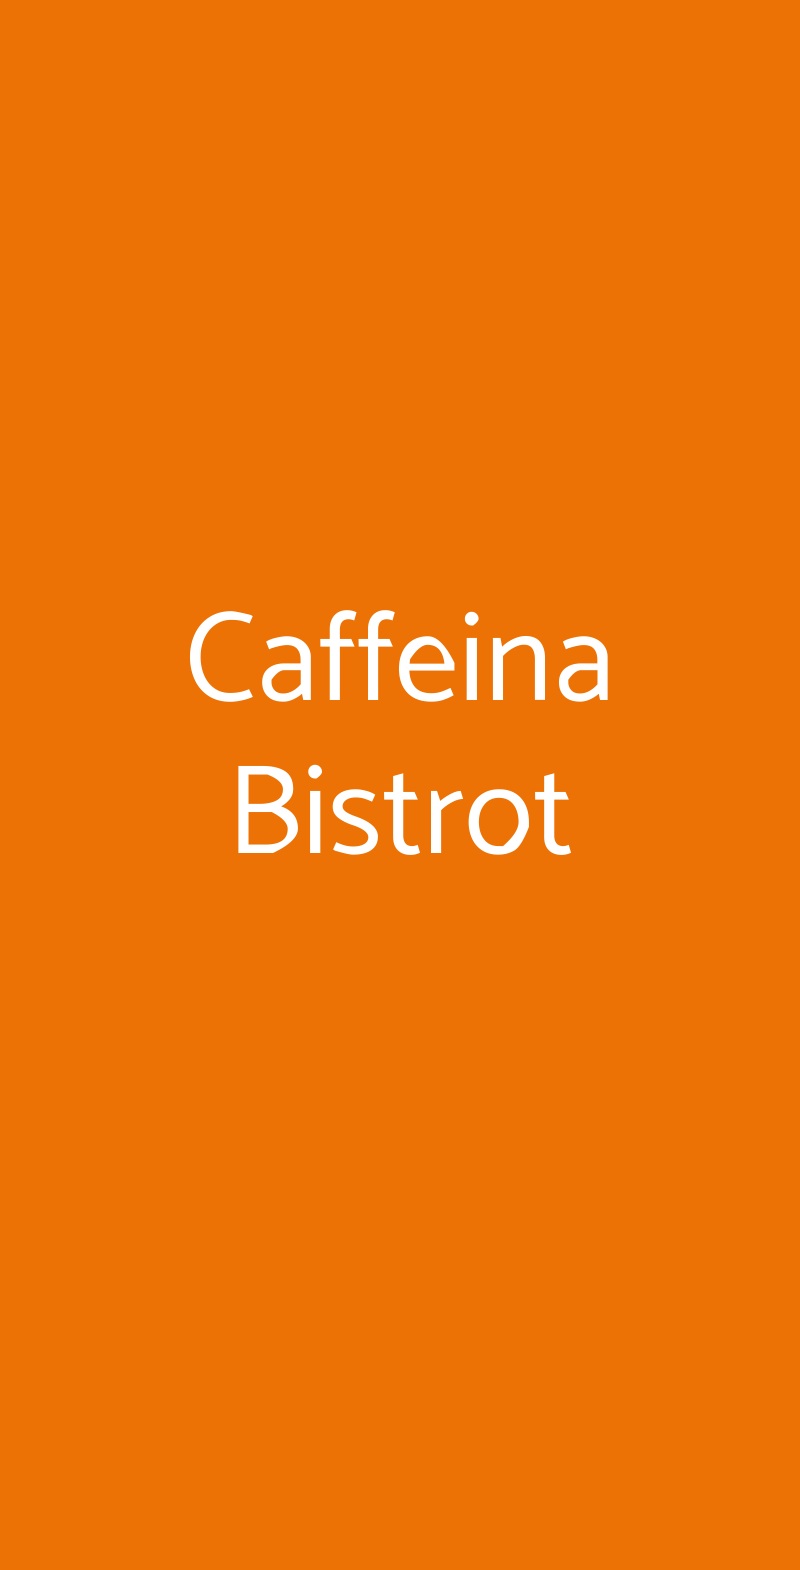 Caffeina Bistrot Misano Adriatico menù 1 pagina